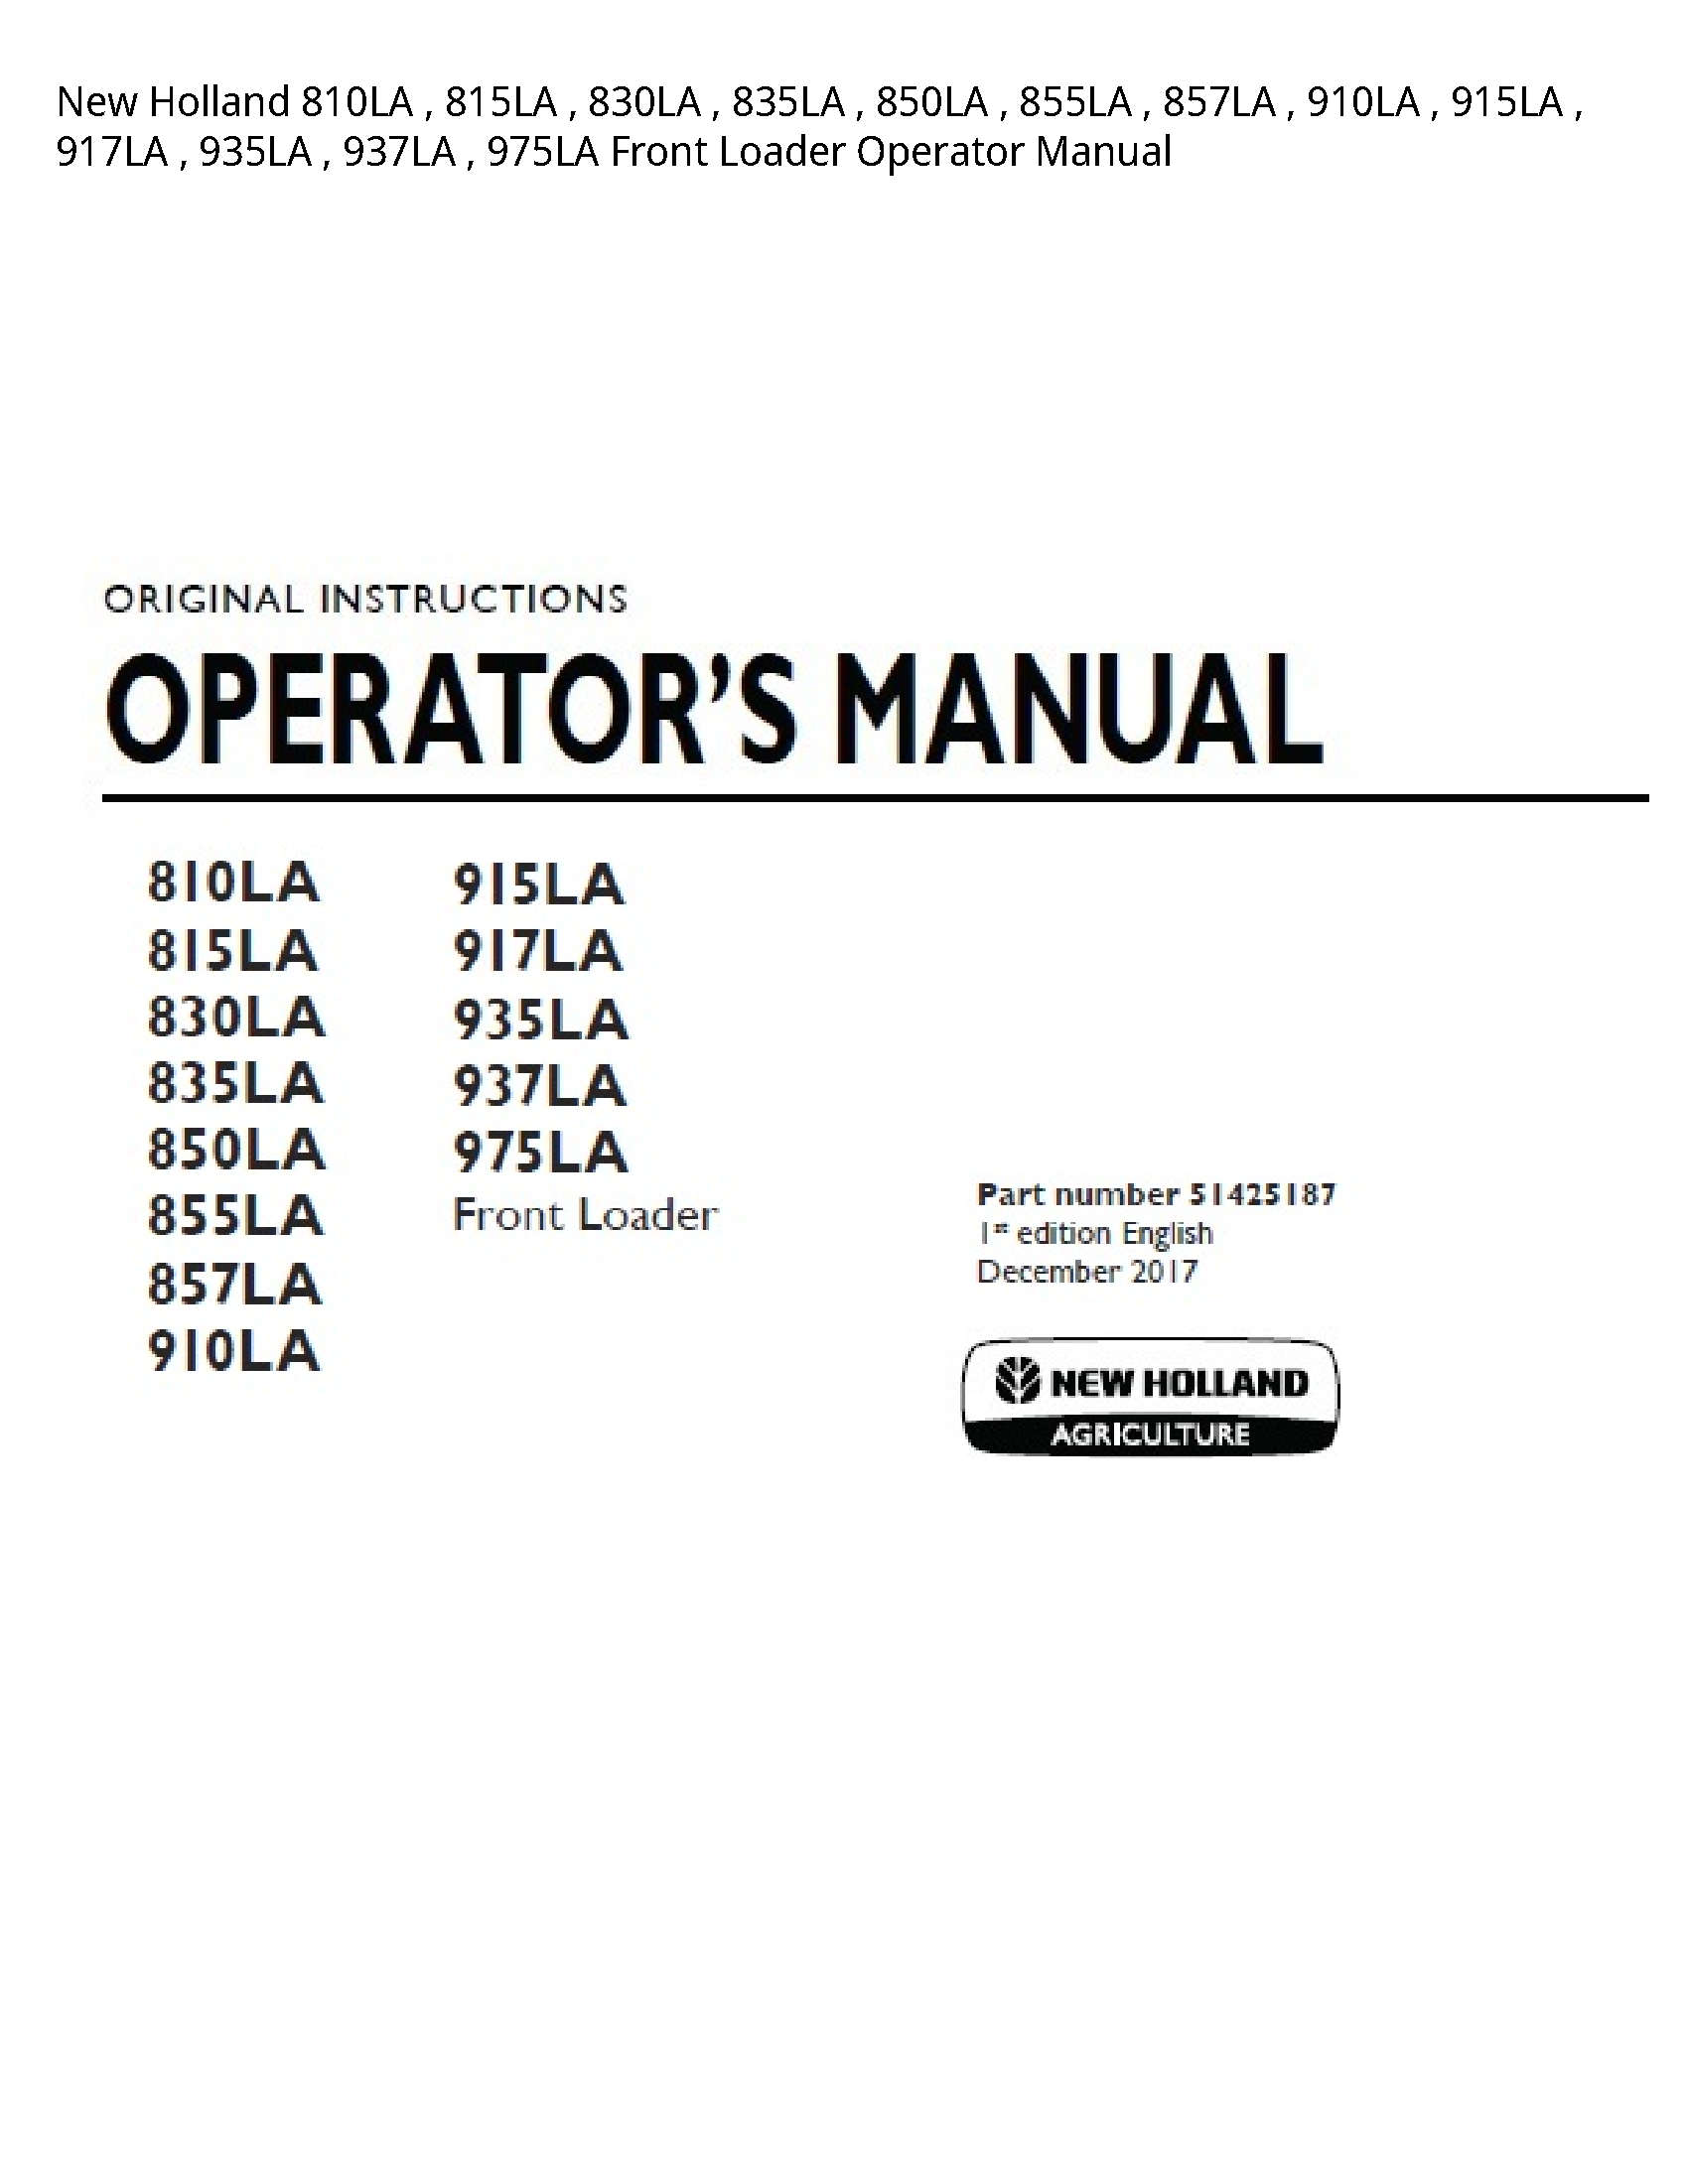 New Holland 810LA Front Loader Operator manual